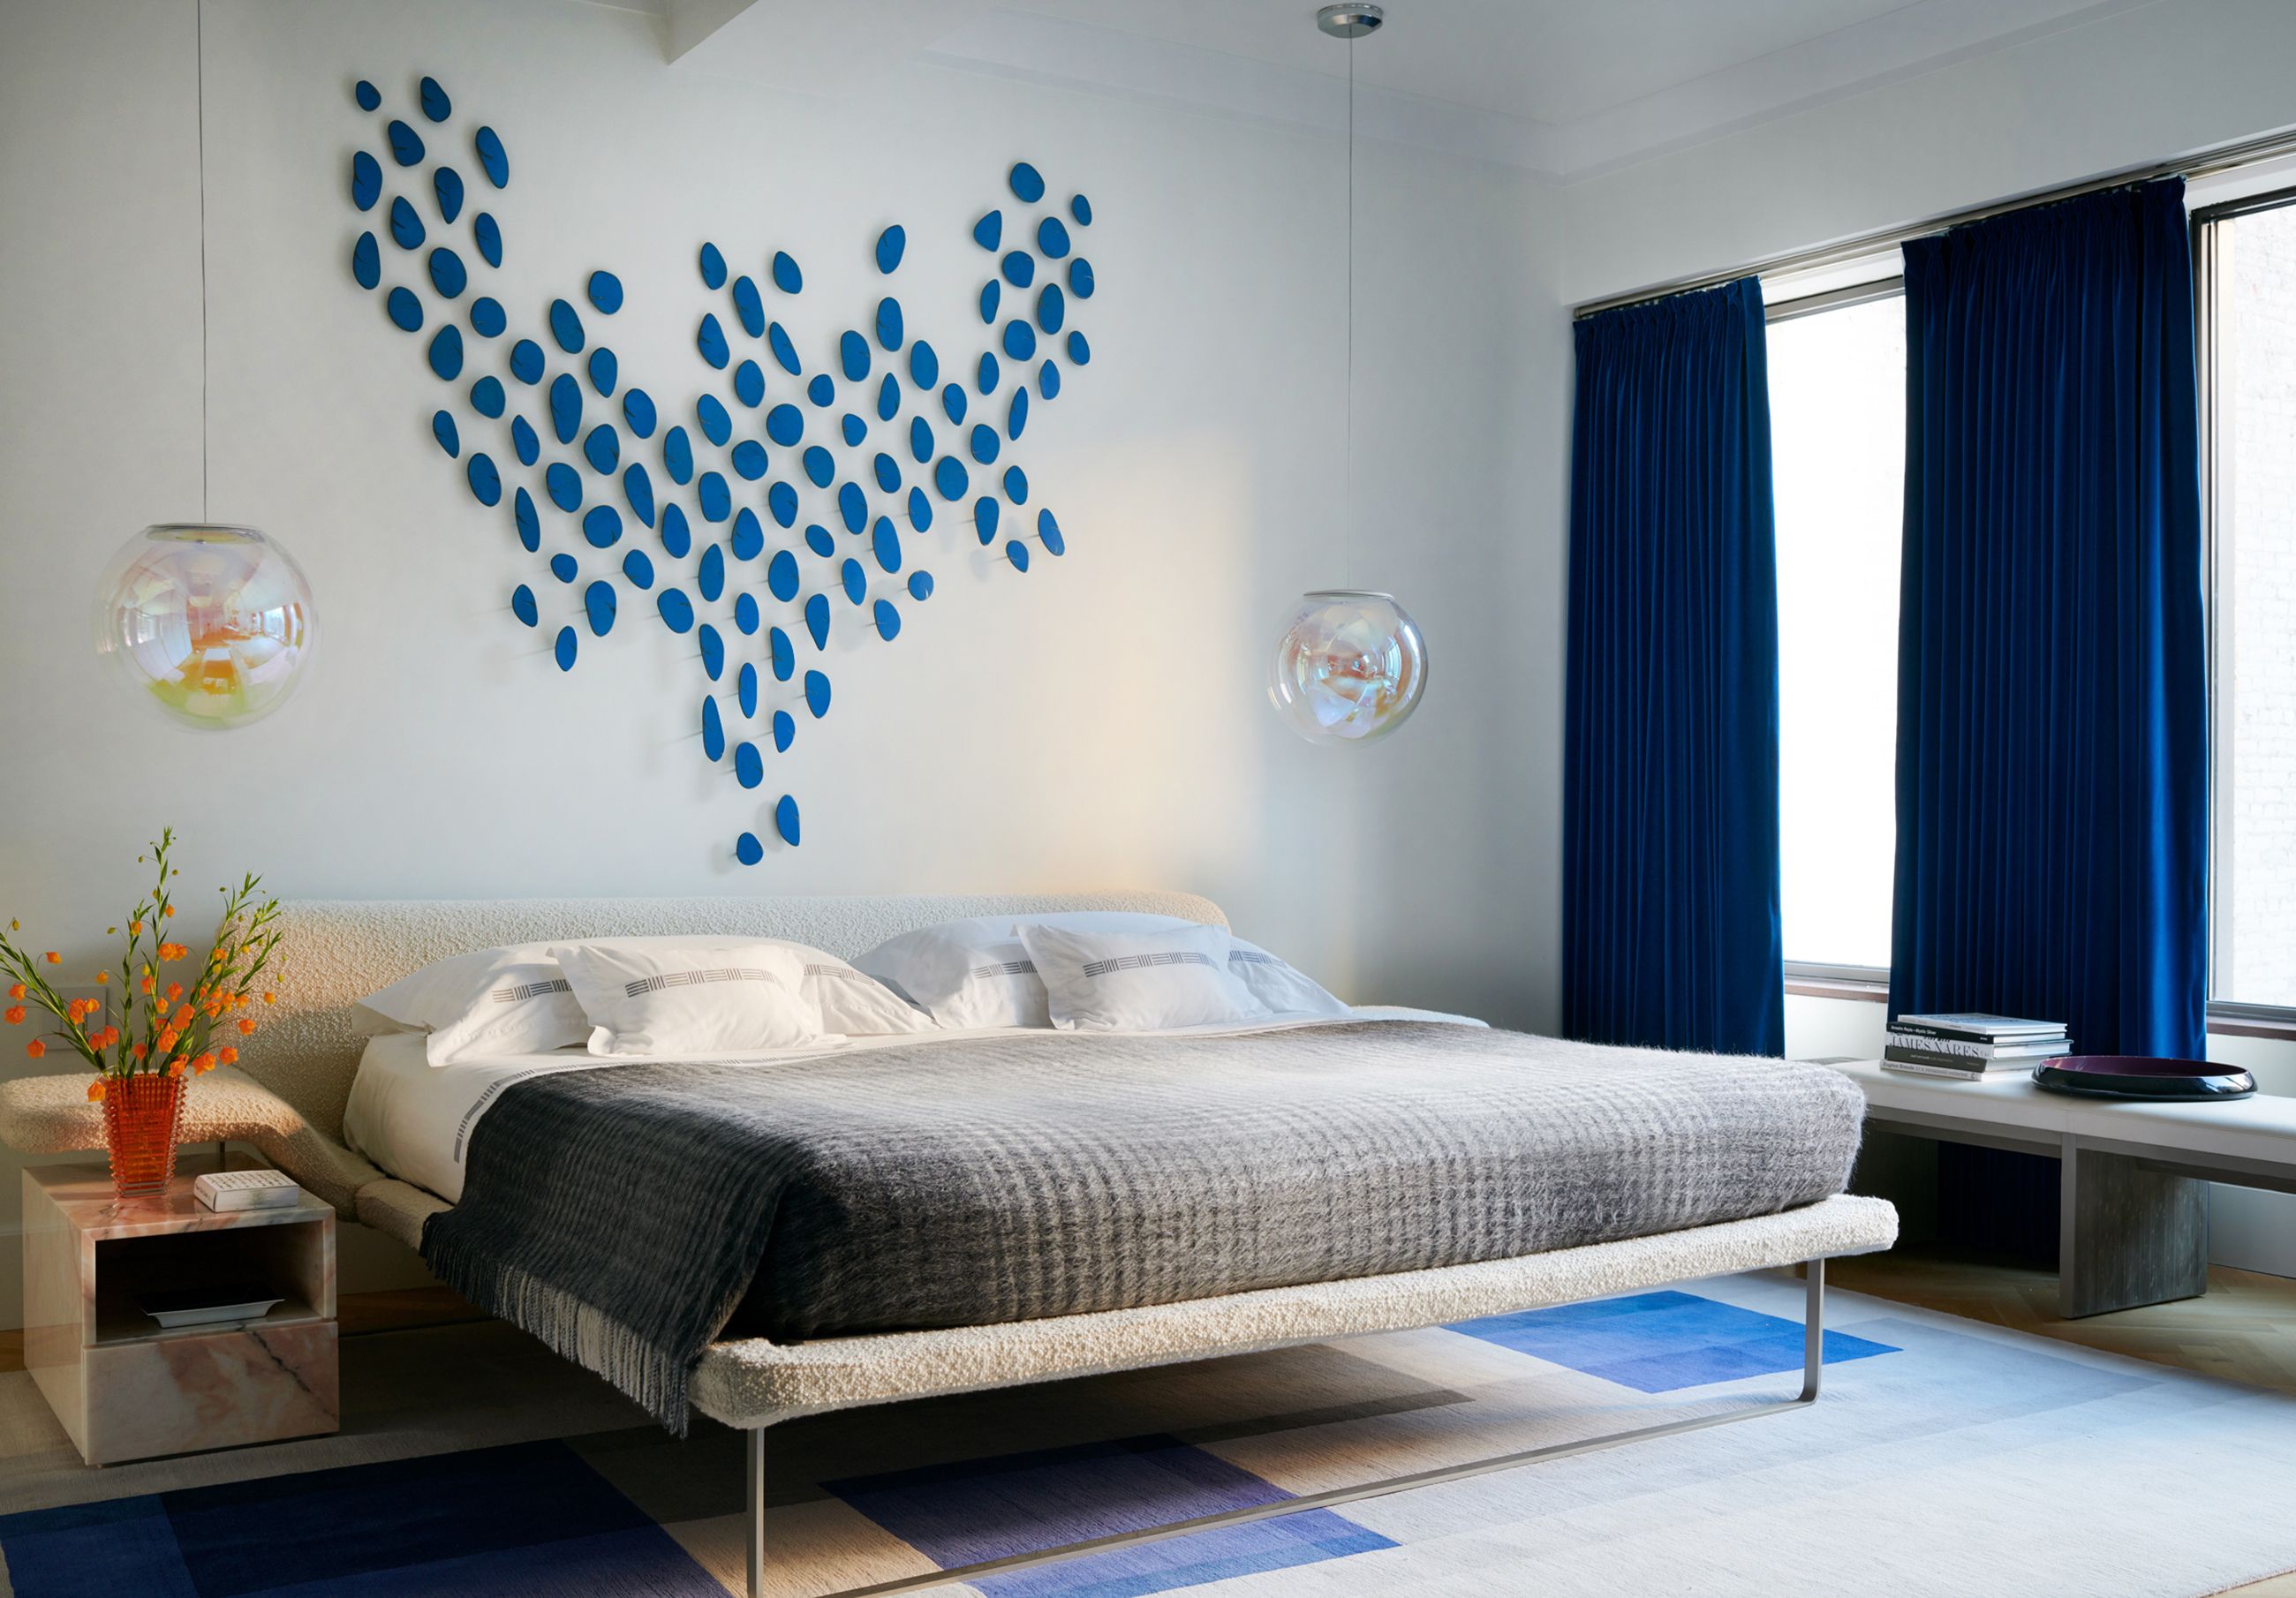 15 Inspiring Modern Bedroom Ideas - Best Modern Bedroom Designs